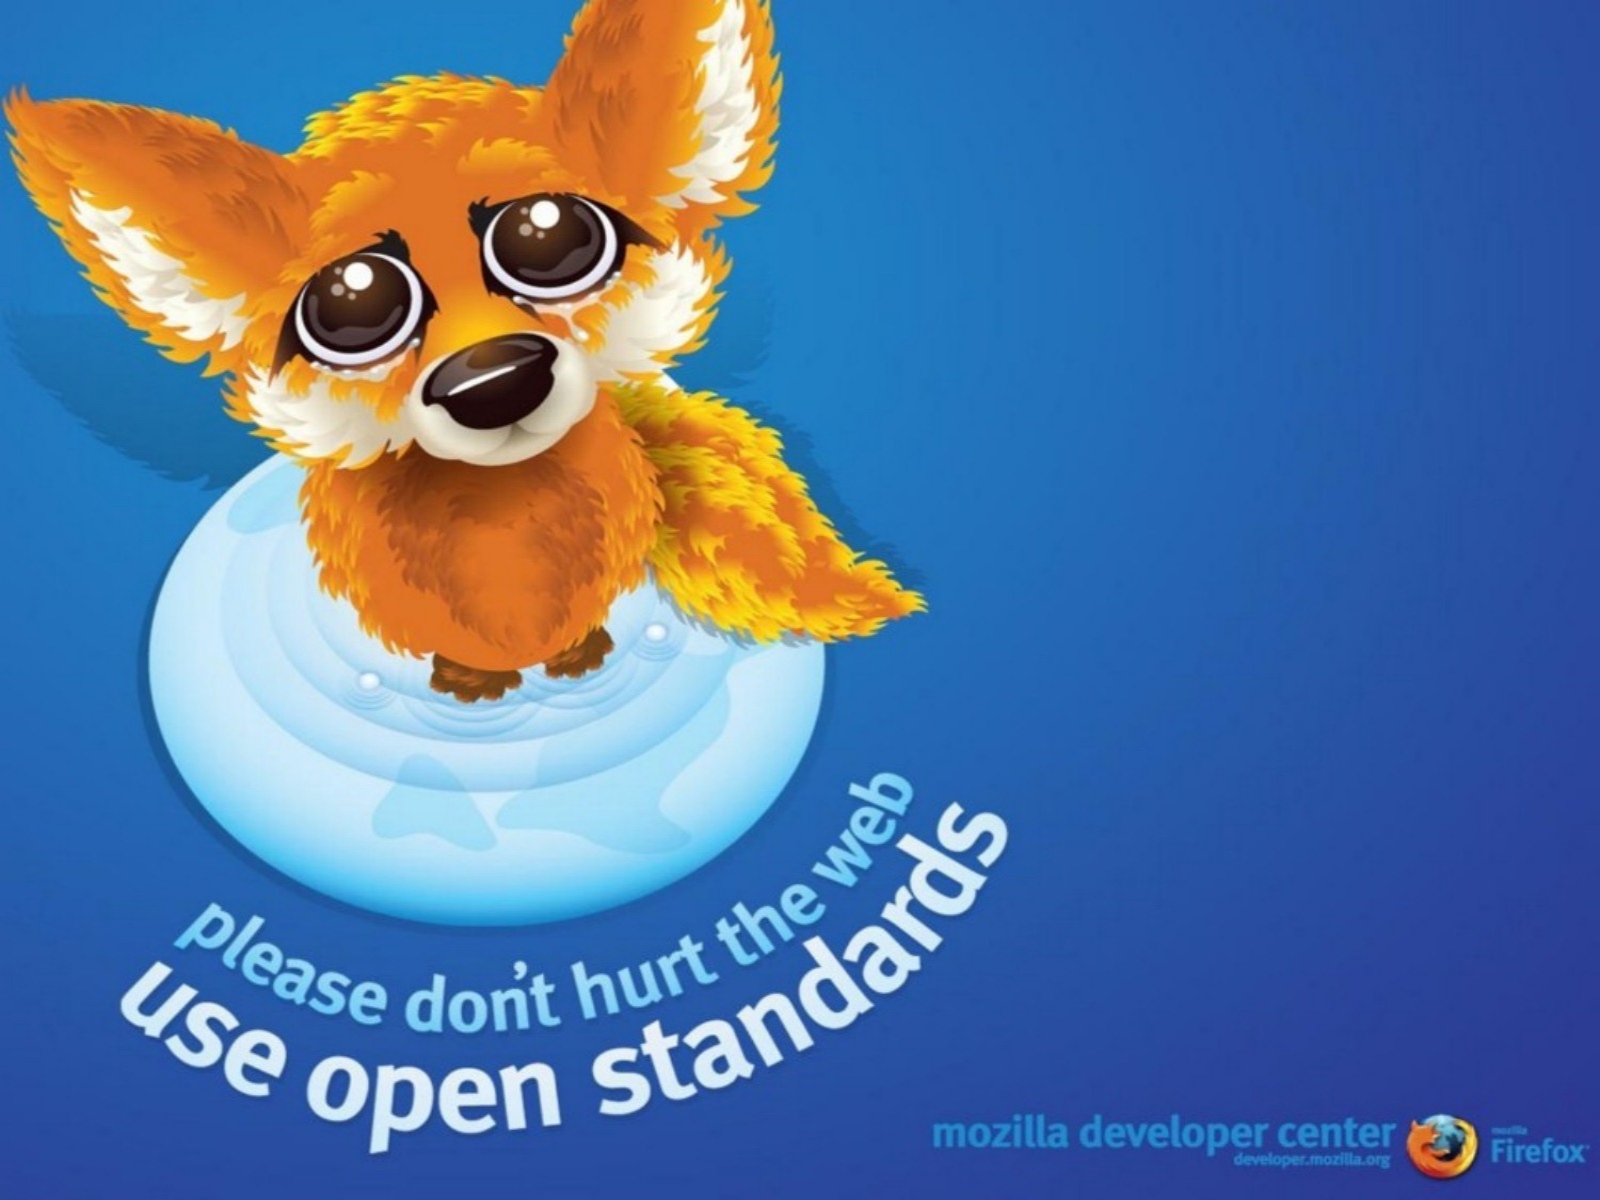 Mozilla Open Source Wallpaper Desktop Open Standards - 1600x1200 ...